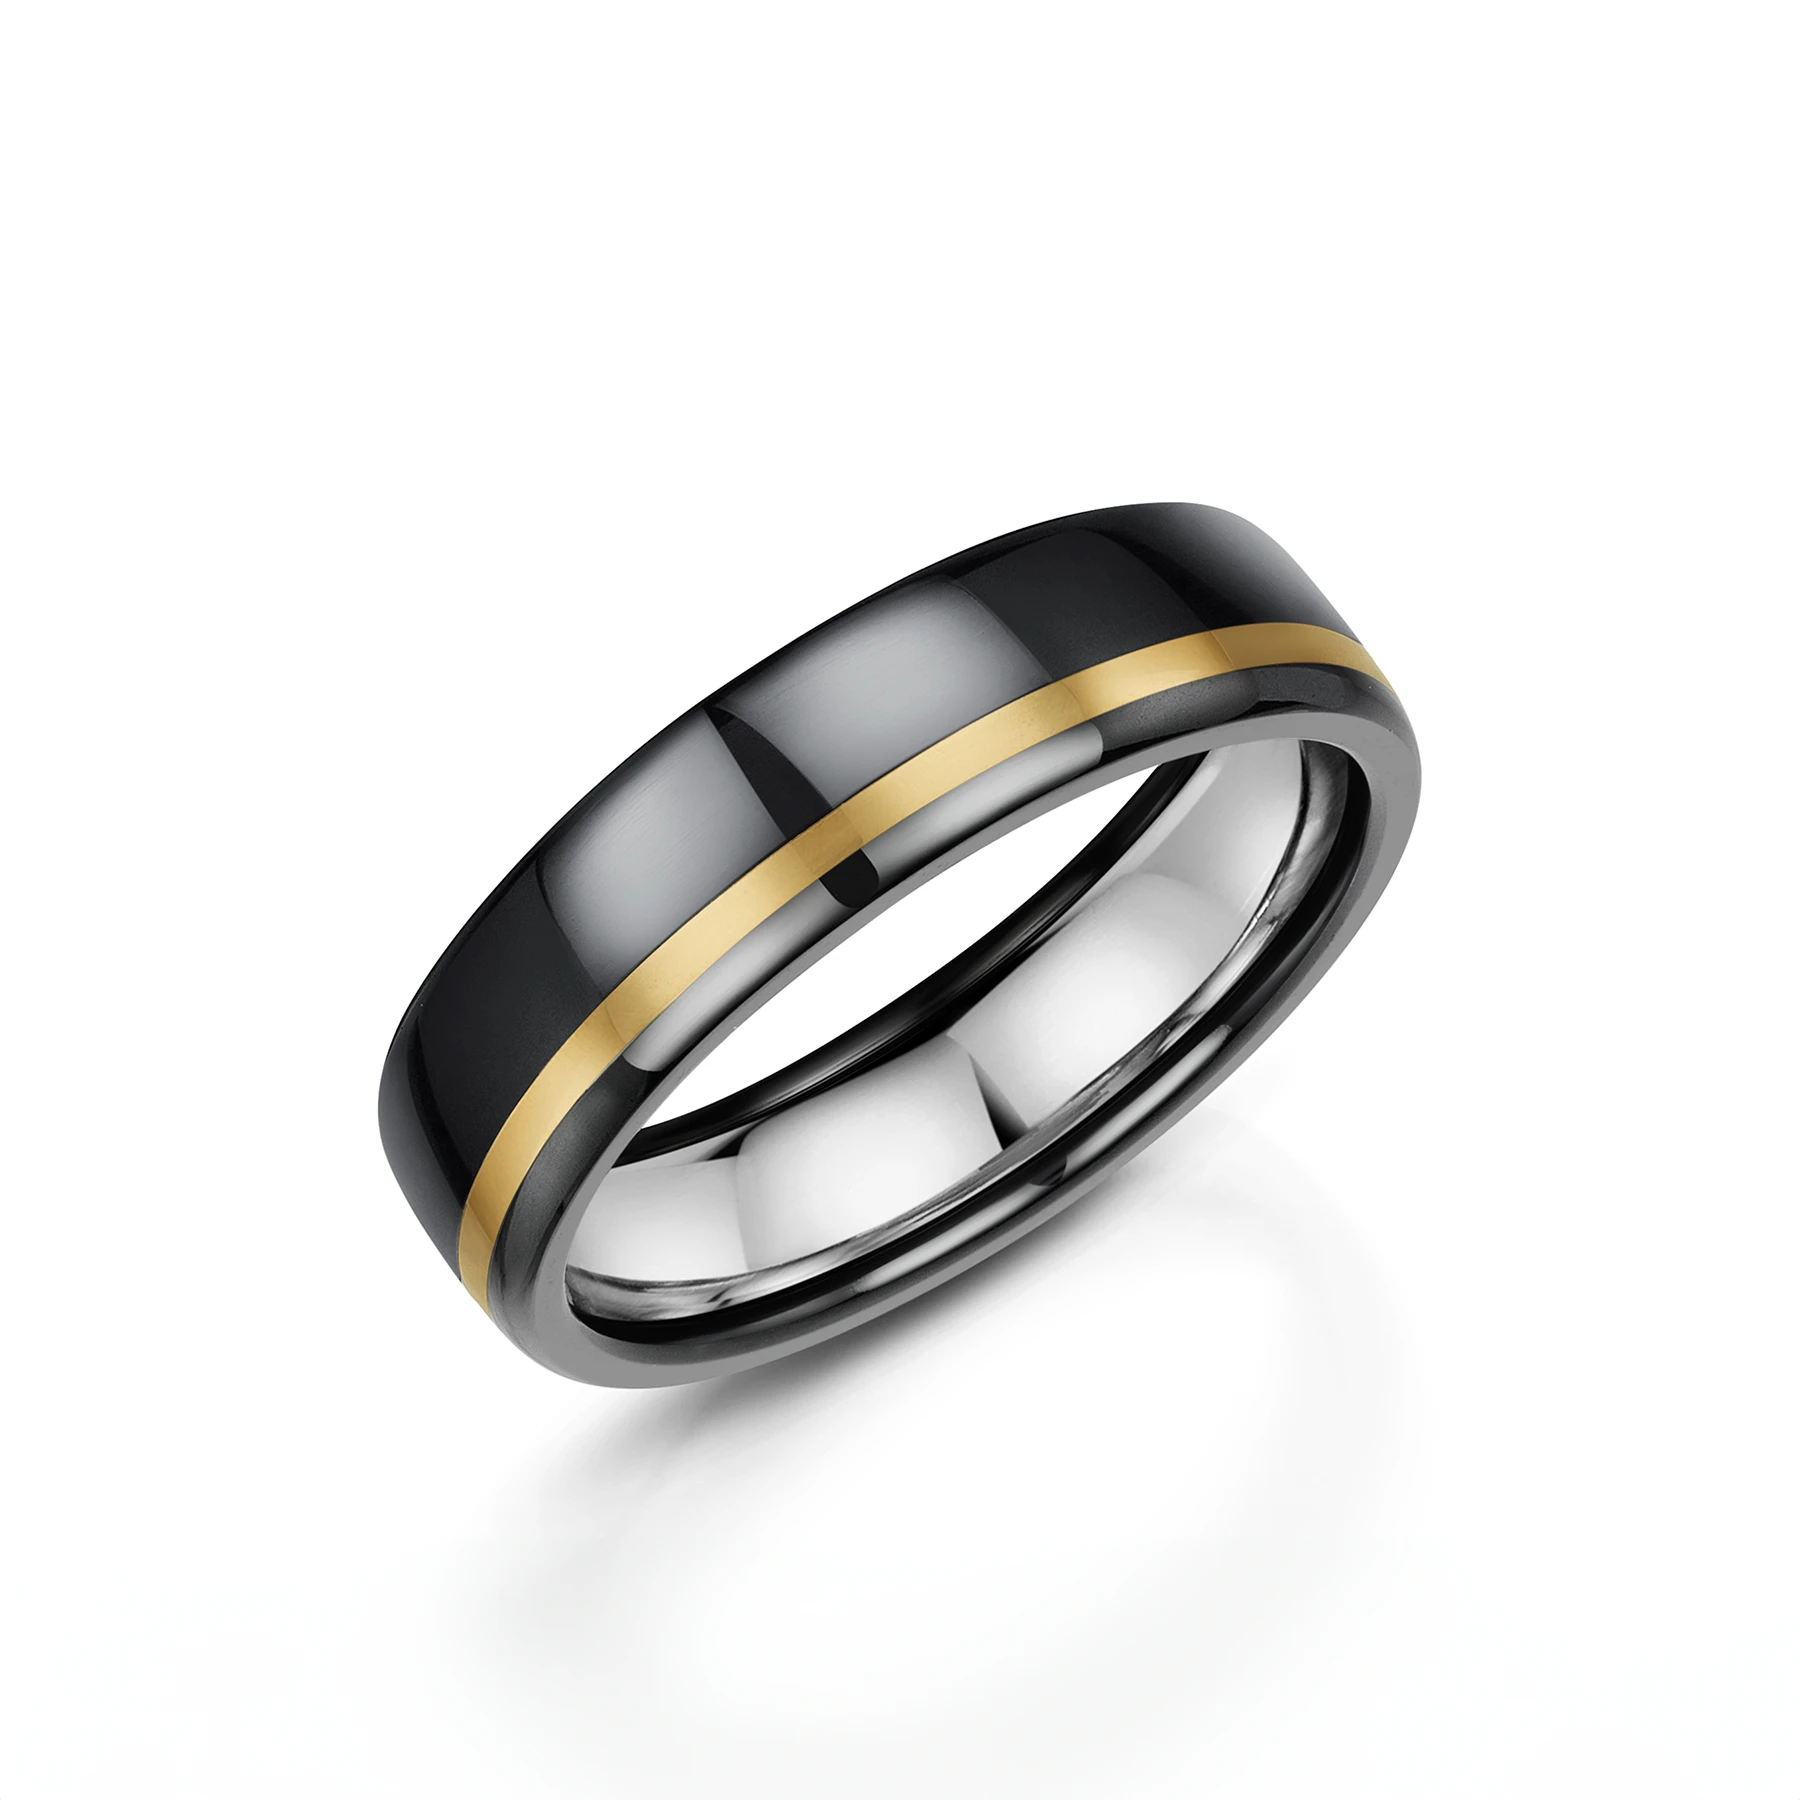 Polished Black Zirconium Wedding Ring with Yellow Gold Inlay